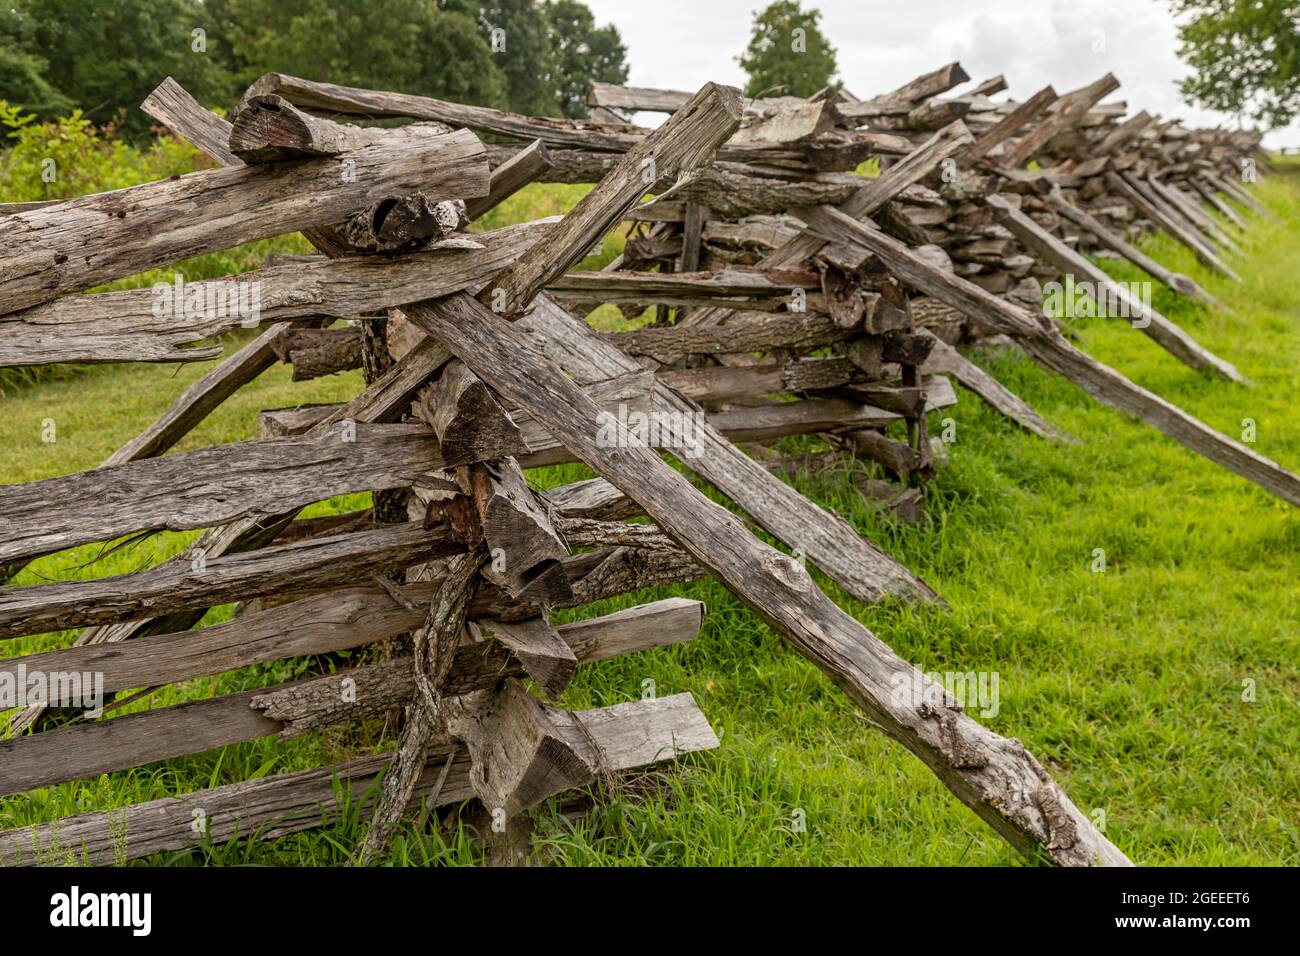 Republic, Missouri - A split rail fence at Wilson's Creek National Battlefield, site of an 1861 battle in the American Civil War. Stock Photo